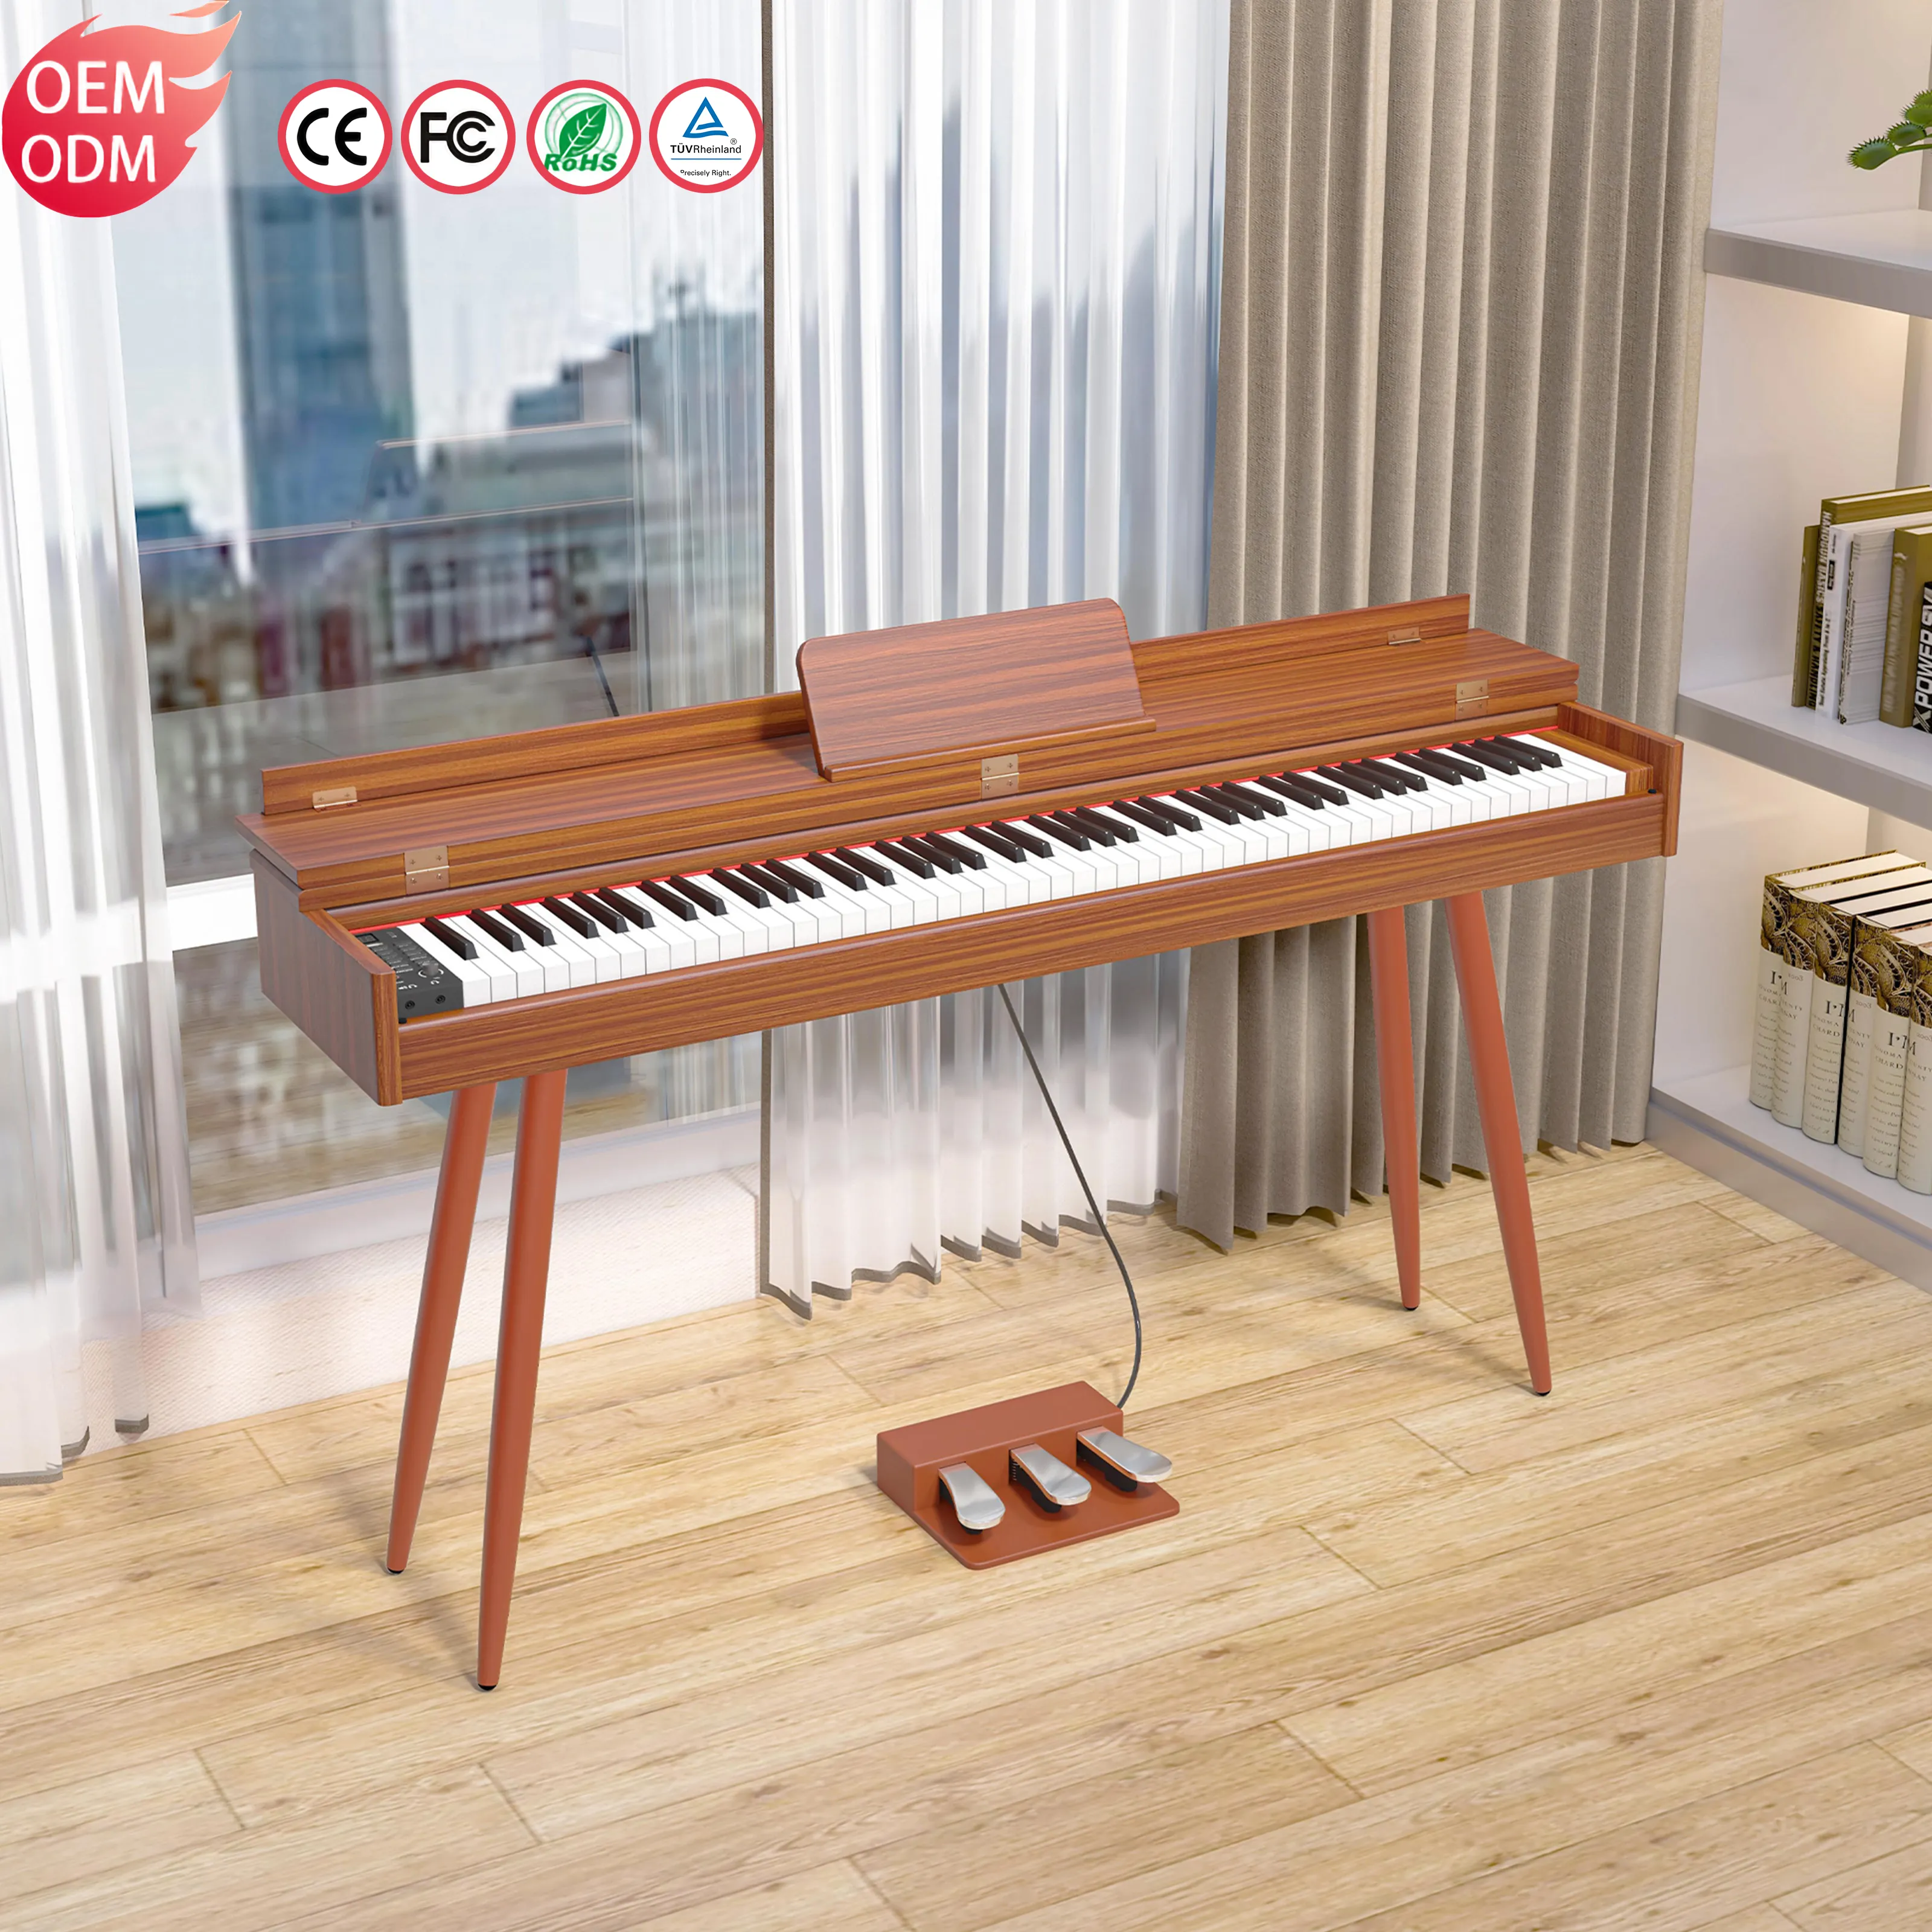 KIMFBAYミュージックキーボードピアノアップライトデジタルピアノ電子ピアノ88キー